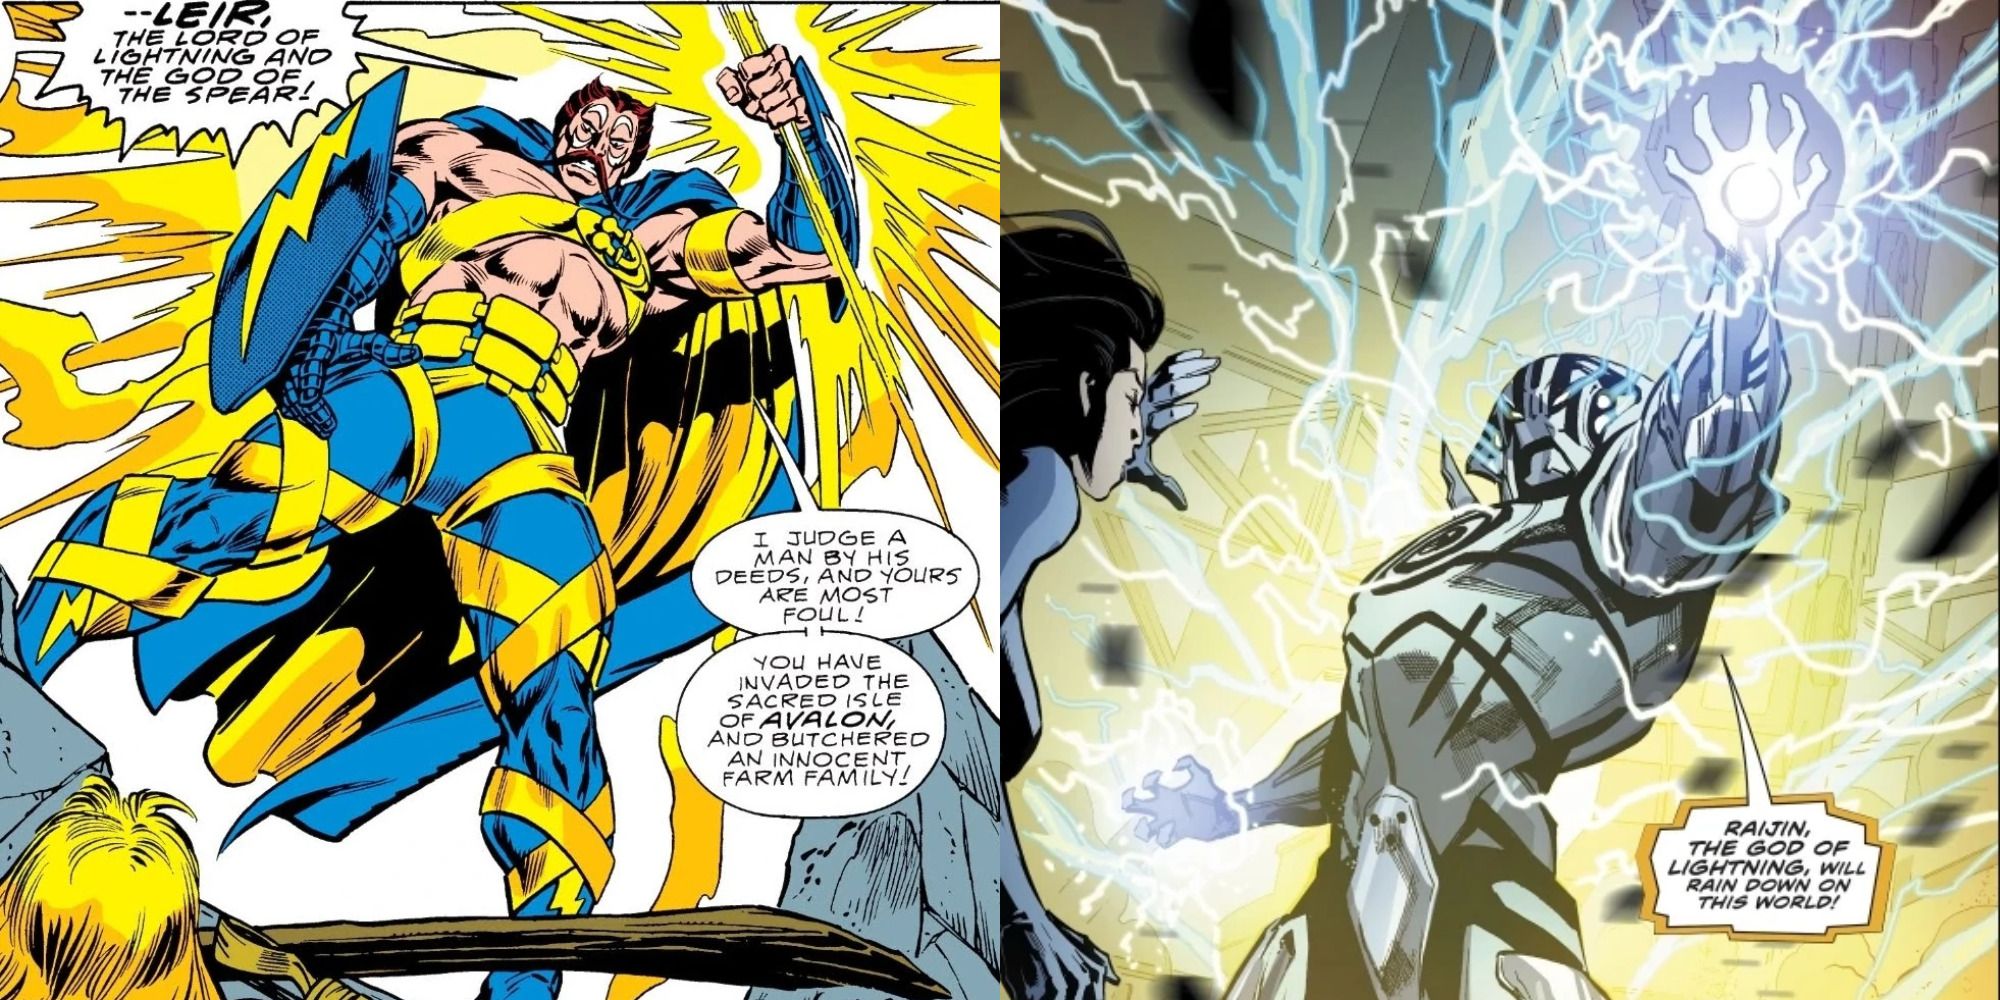 Gods of Thunder Raijin and Leir as seen in the comics